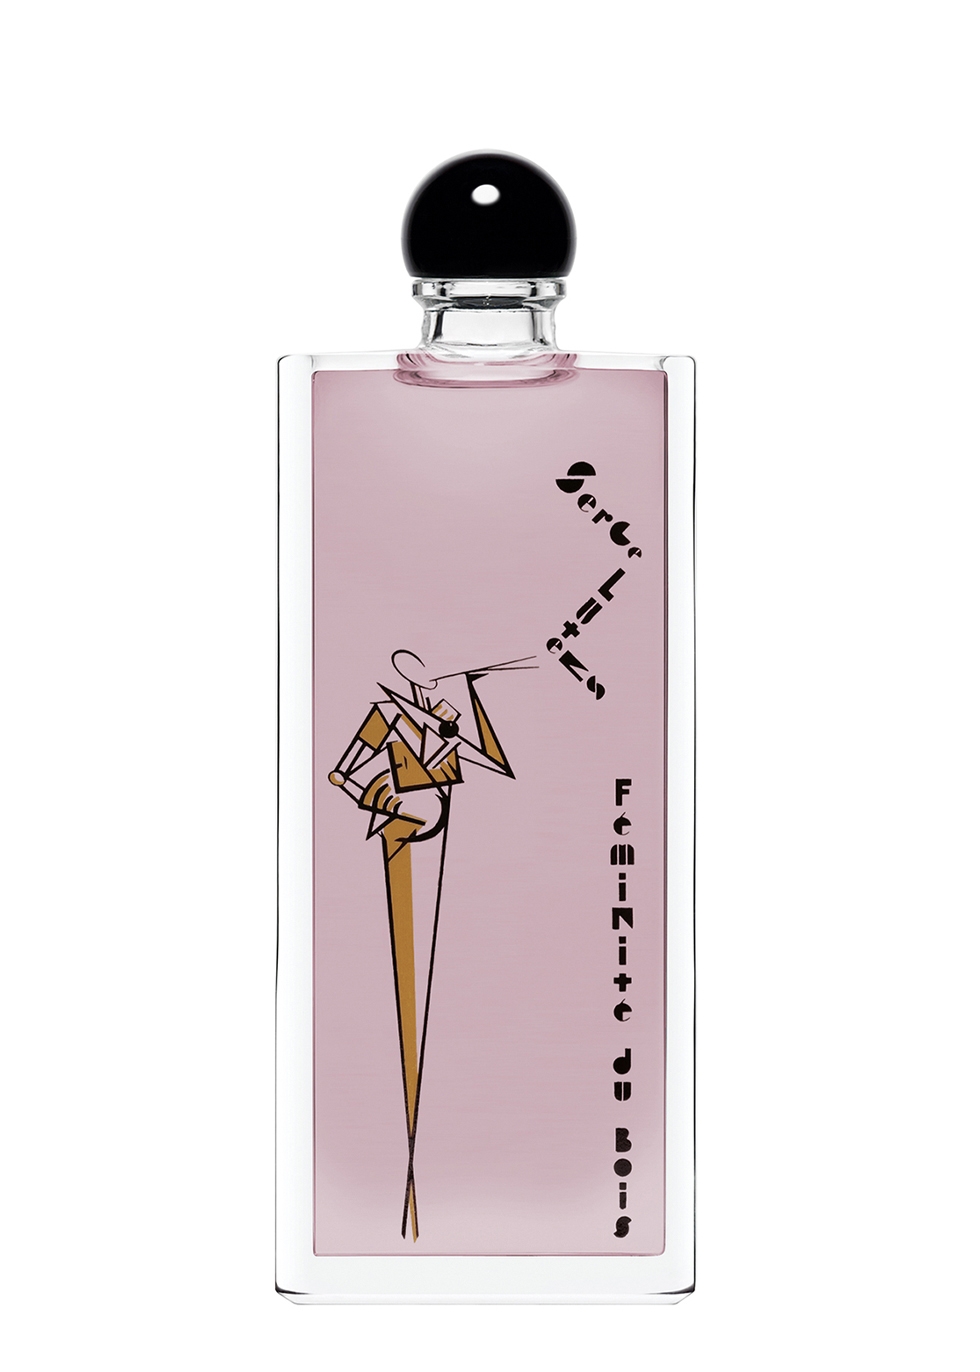 Serge Lutens Féminité Du Bois Limited Edition Perfume Cedarwood Floral Plum Designer Luxury Feminine Fragrance